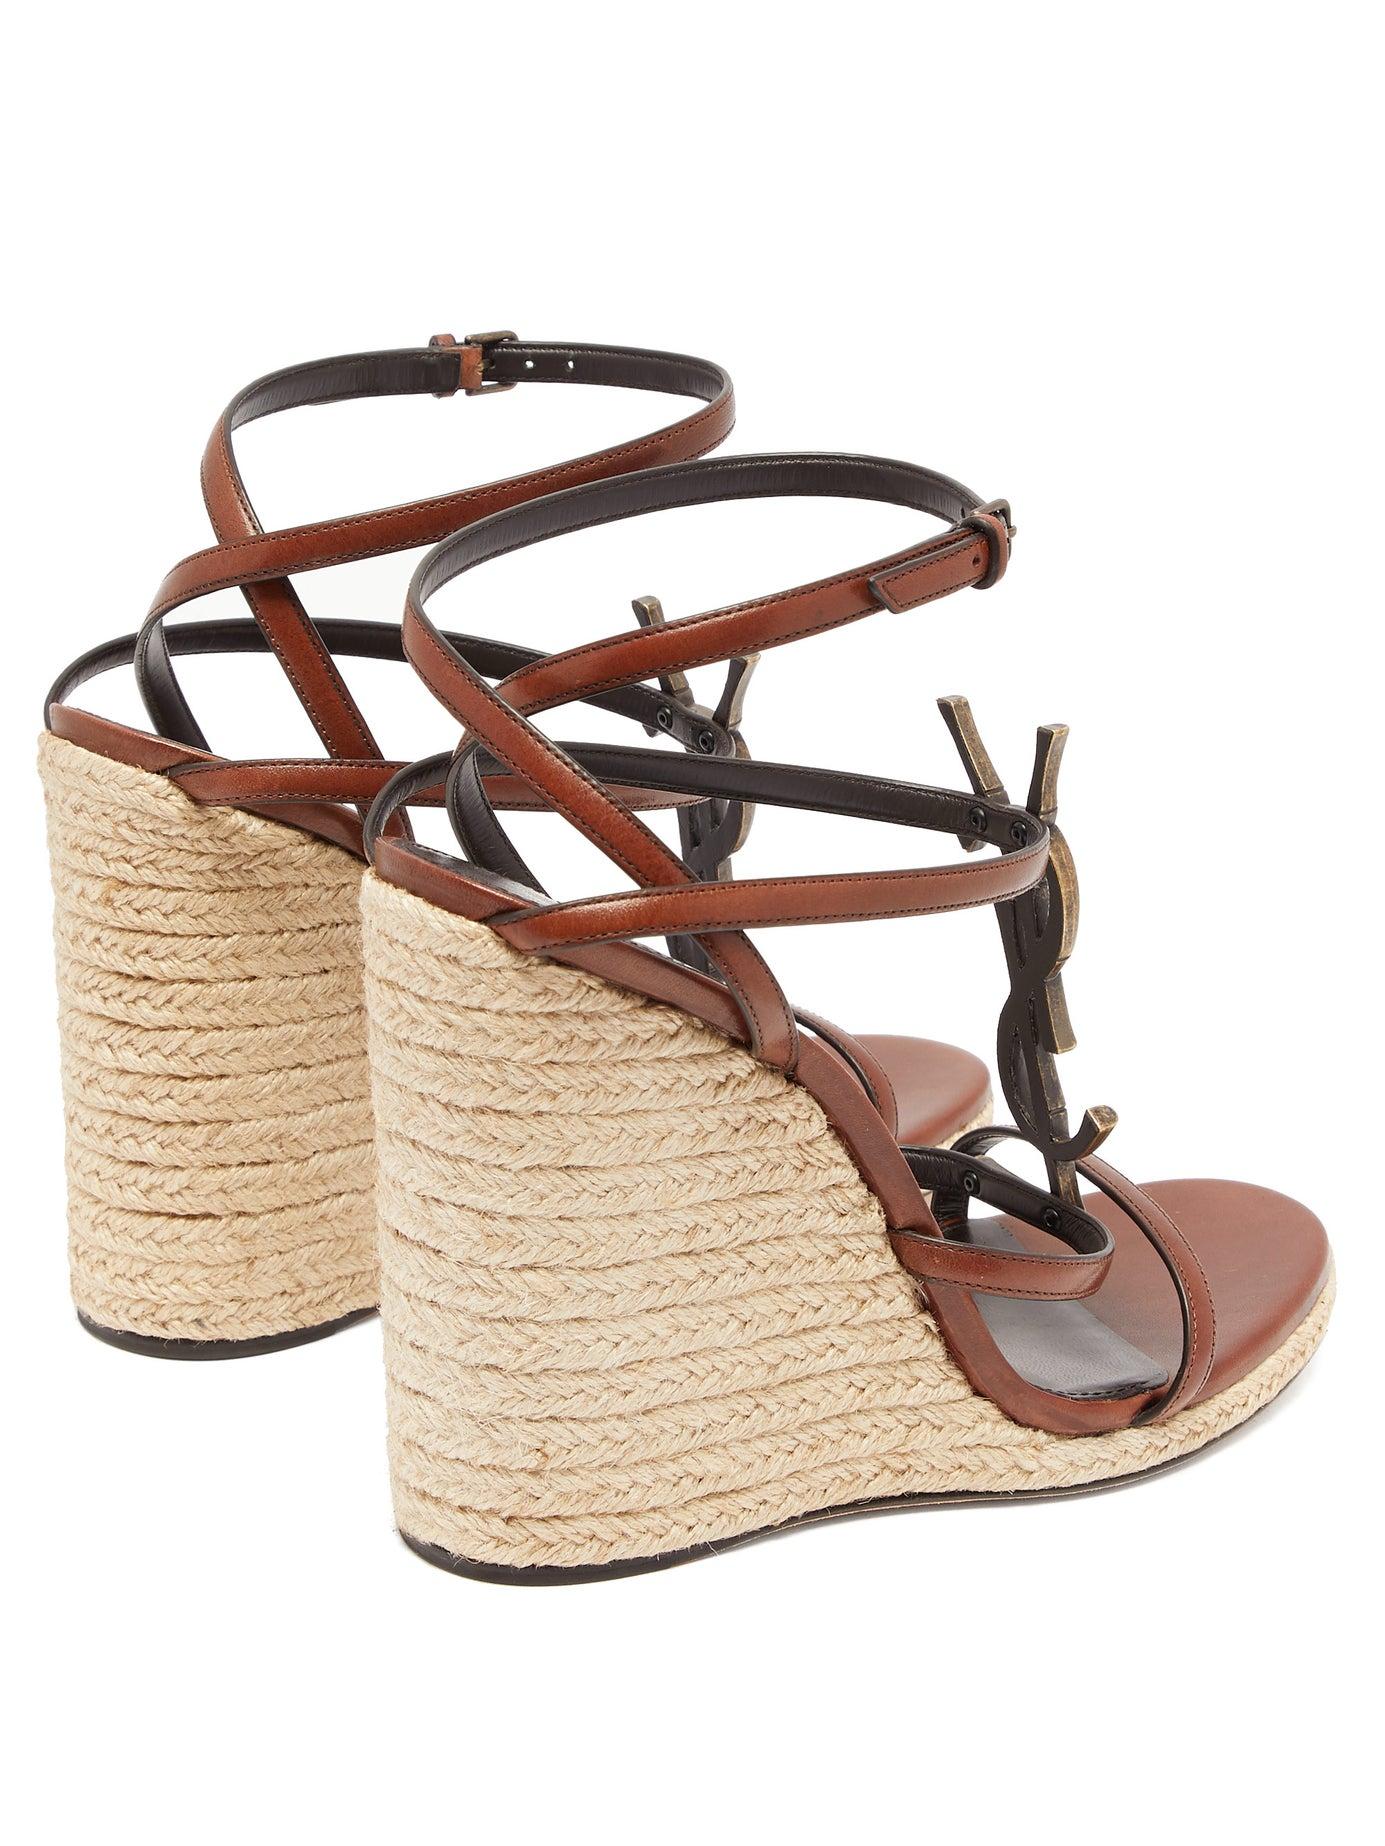 Saint Laurent Cassandra Ysl-monogram Leather Wedge Sandals in Brown